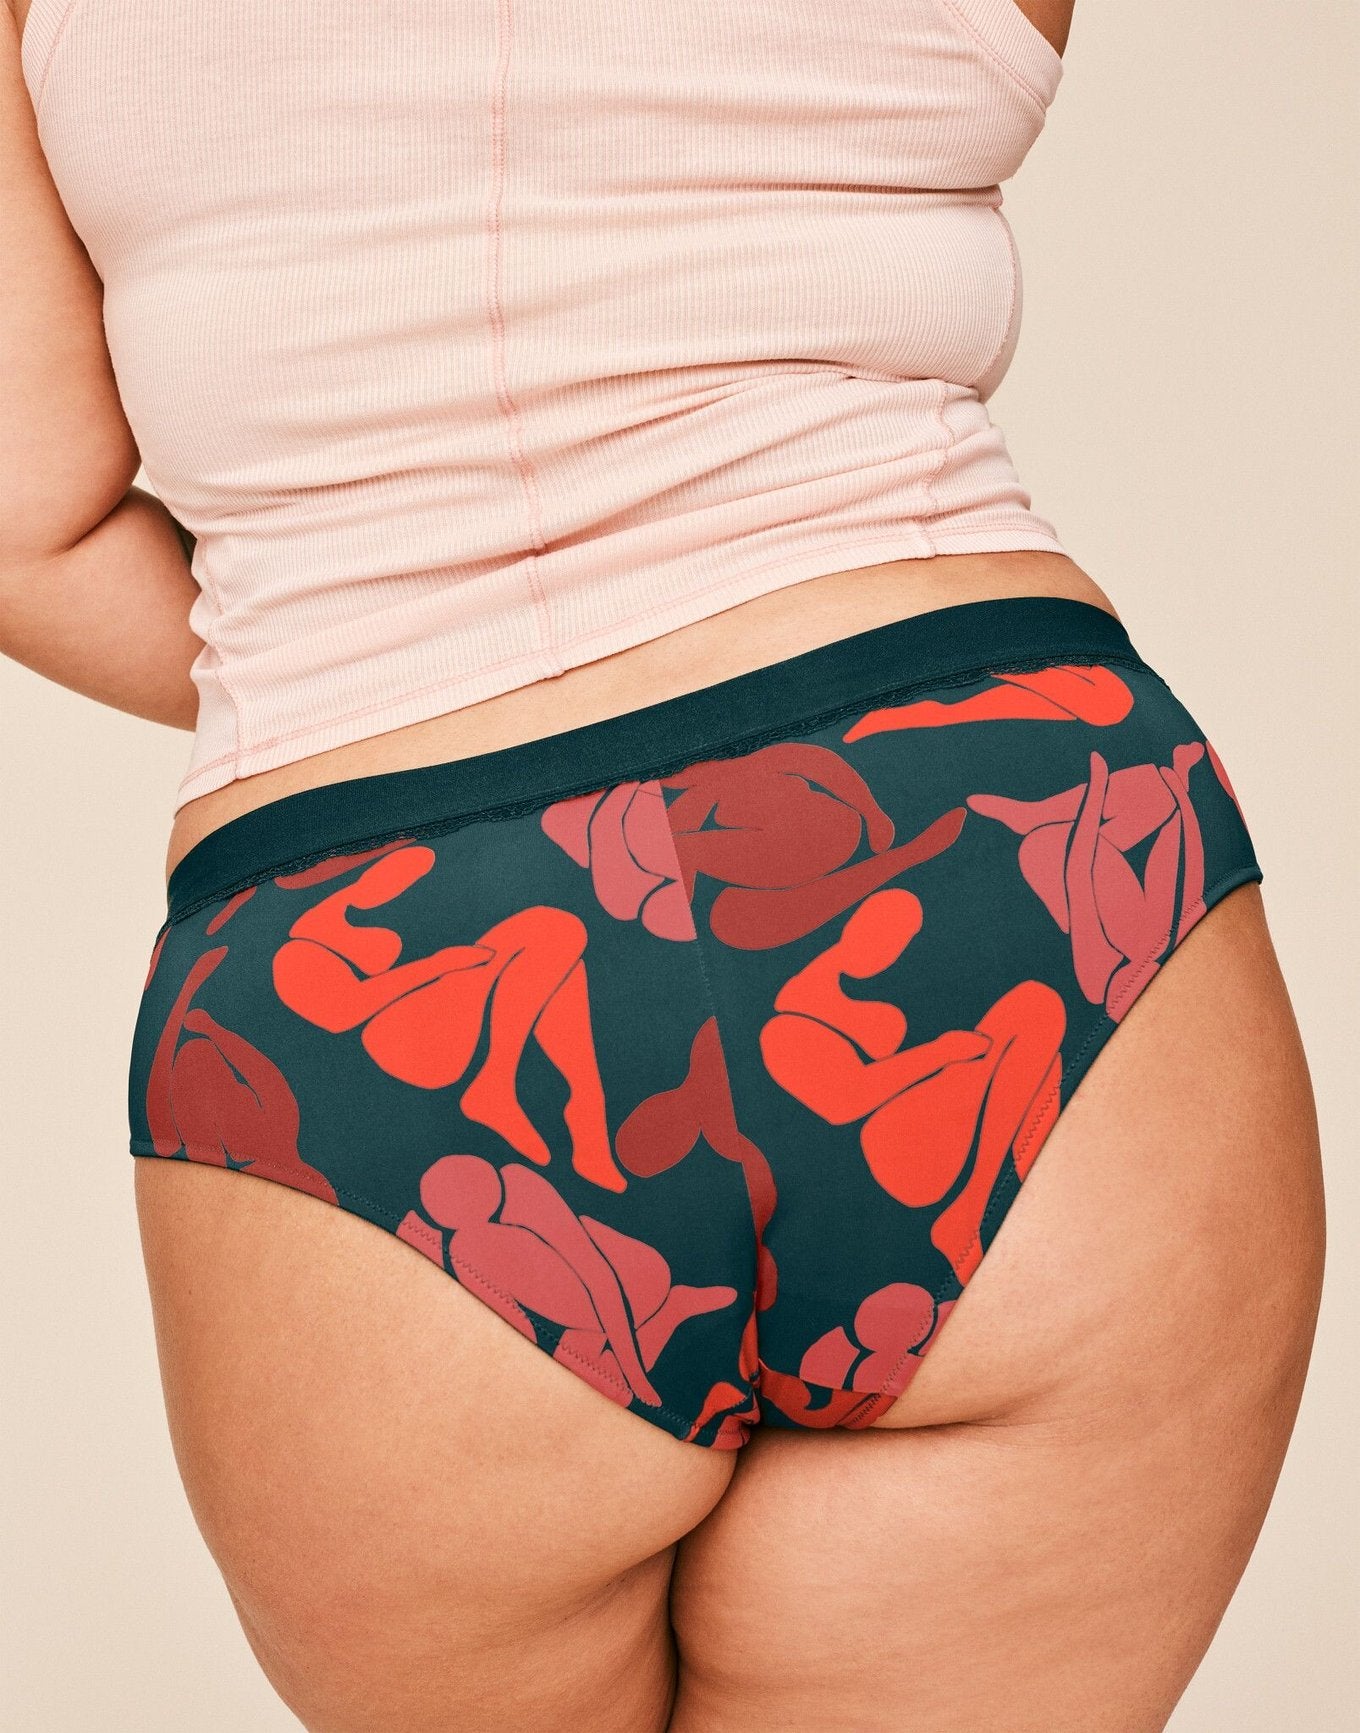 Shero LeakProof Thong Period Underwear, Odor Control & Moisture Wicking  Underwear for Women